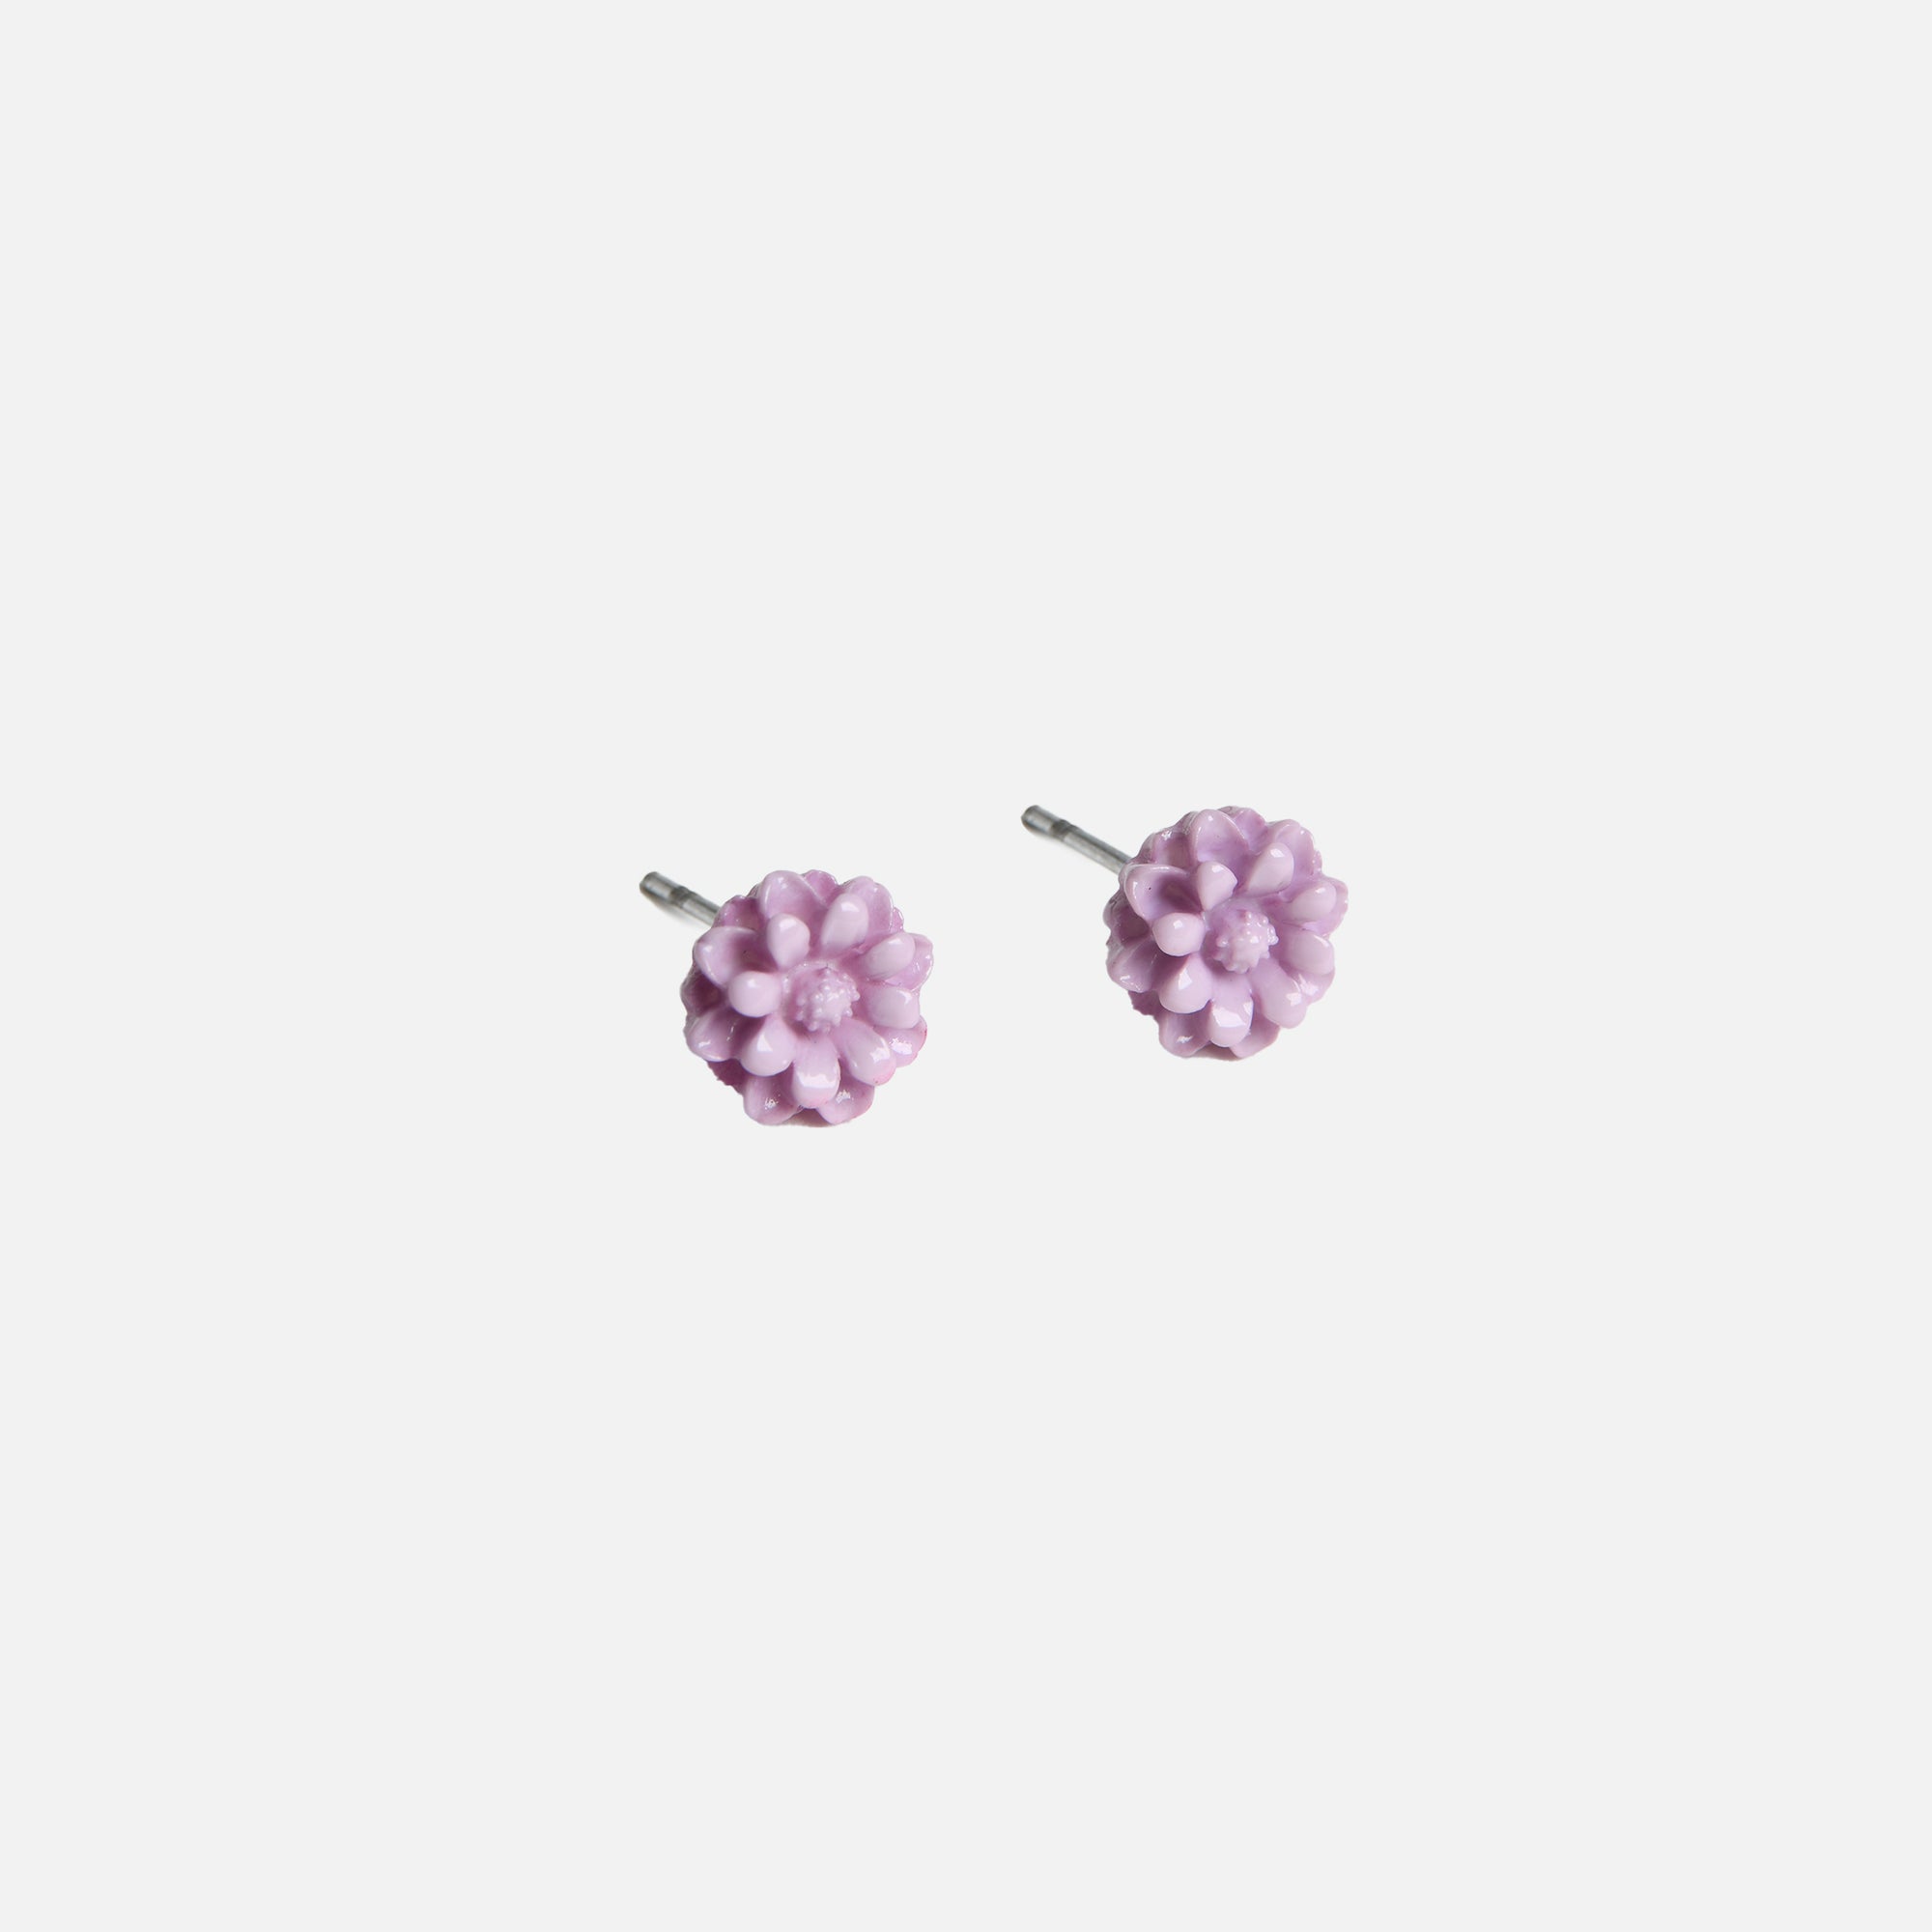 Set of three earrings with purple flowers